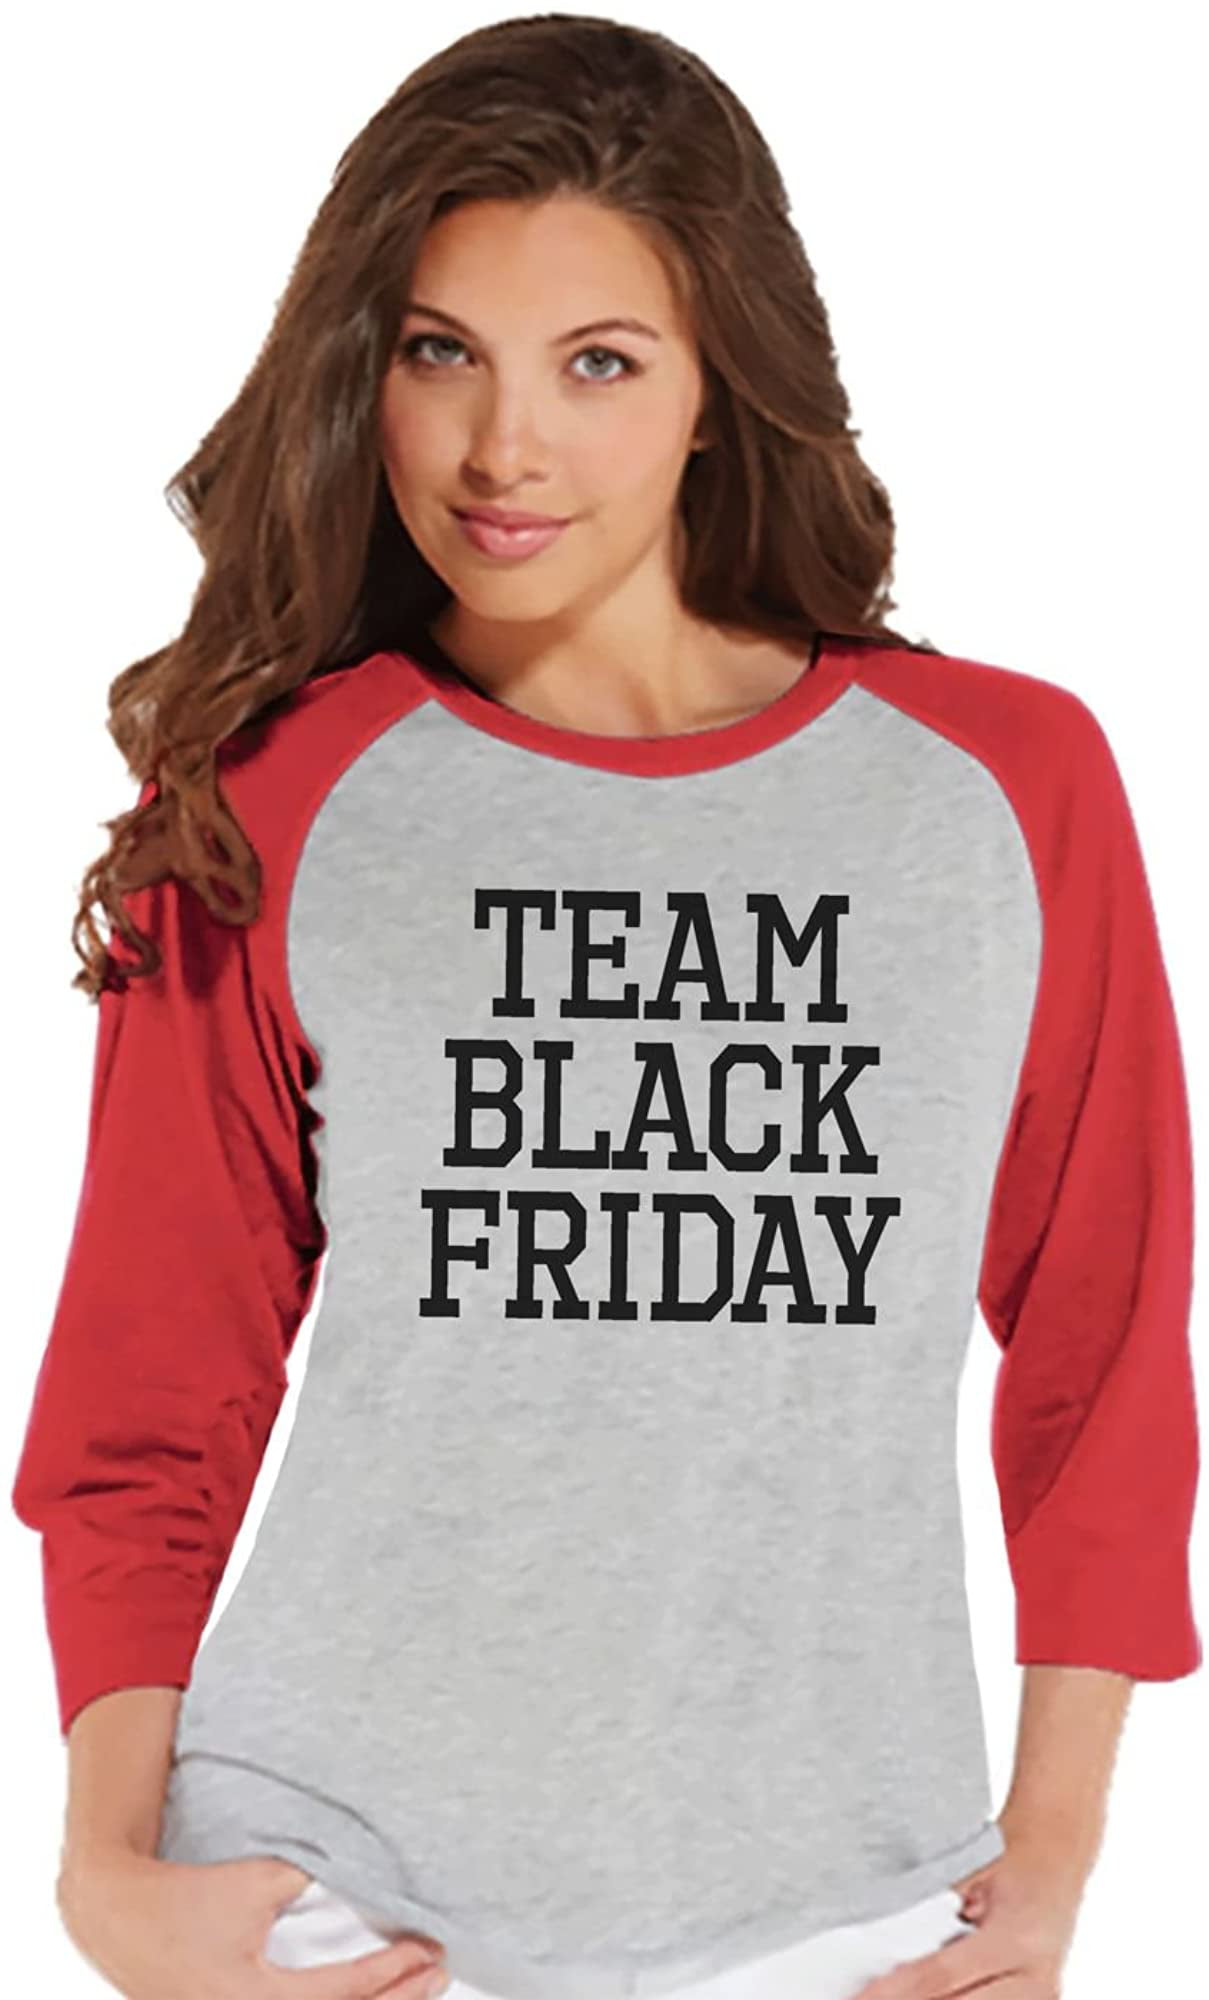 Black Friday Crew Tee Baseball Shirt Black Friday Shirt Shopping with my Crew Black Friday Squad Raglan Black Friday